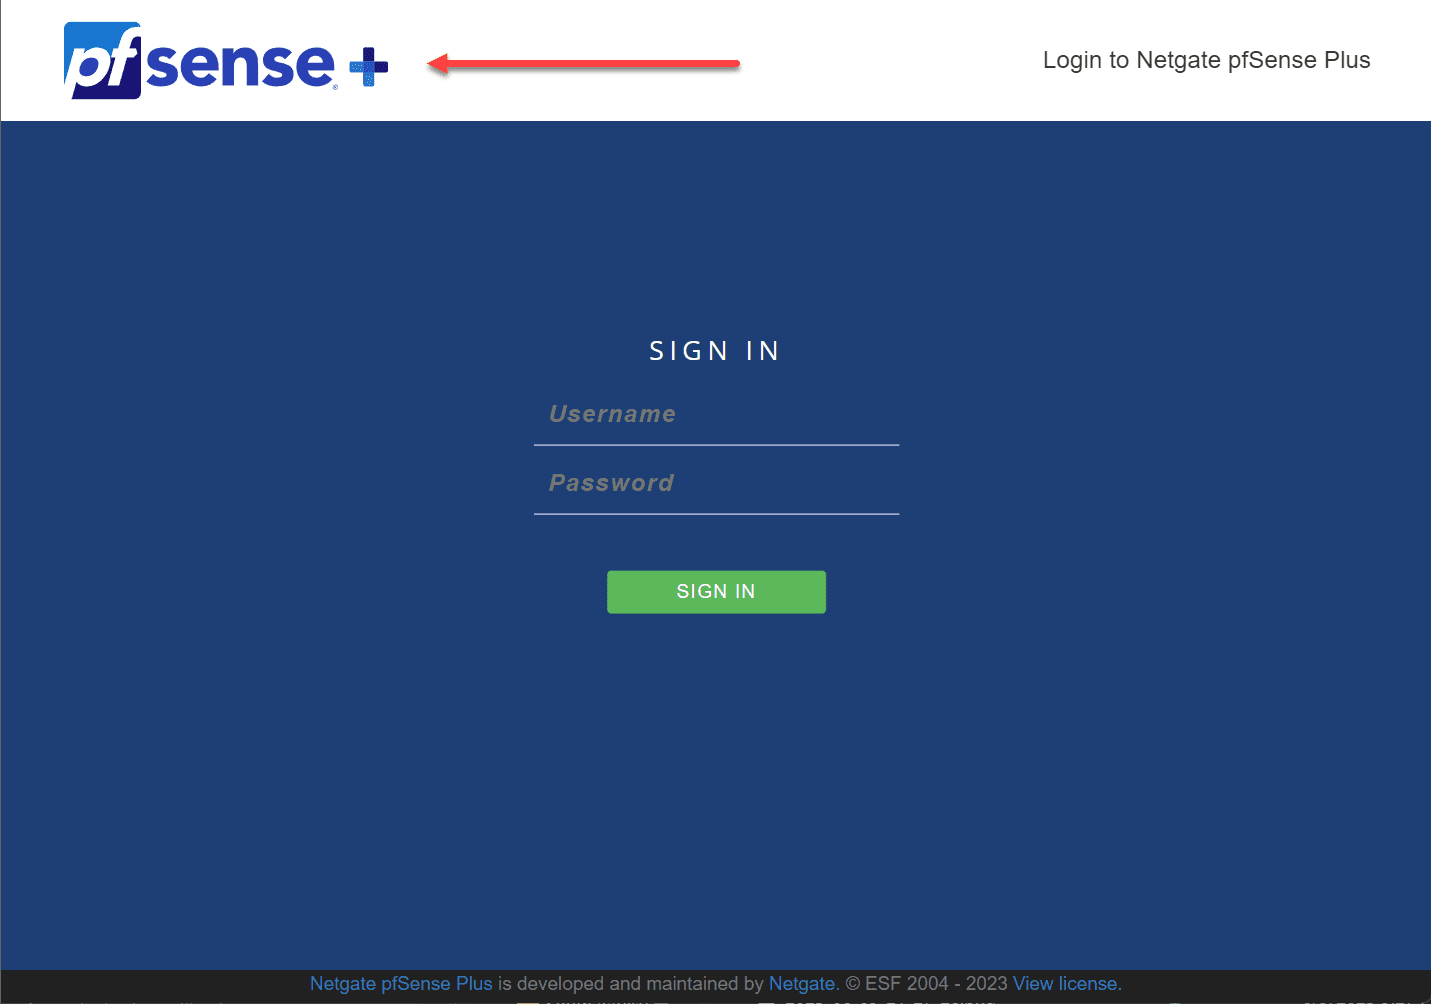 pfSense Plus displaying on the login screen